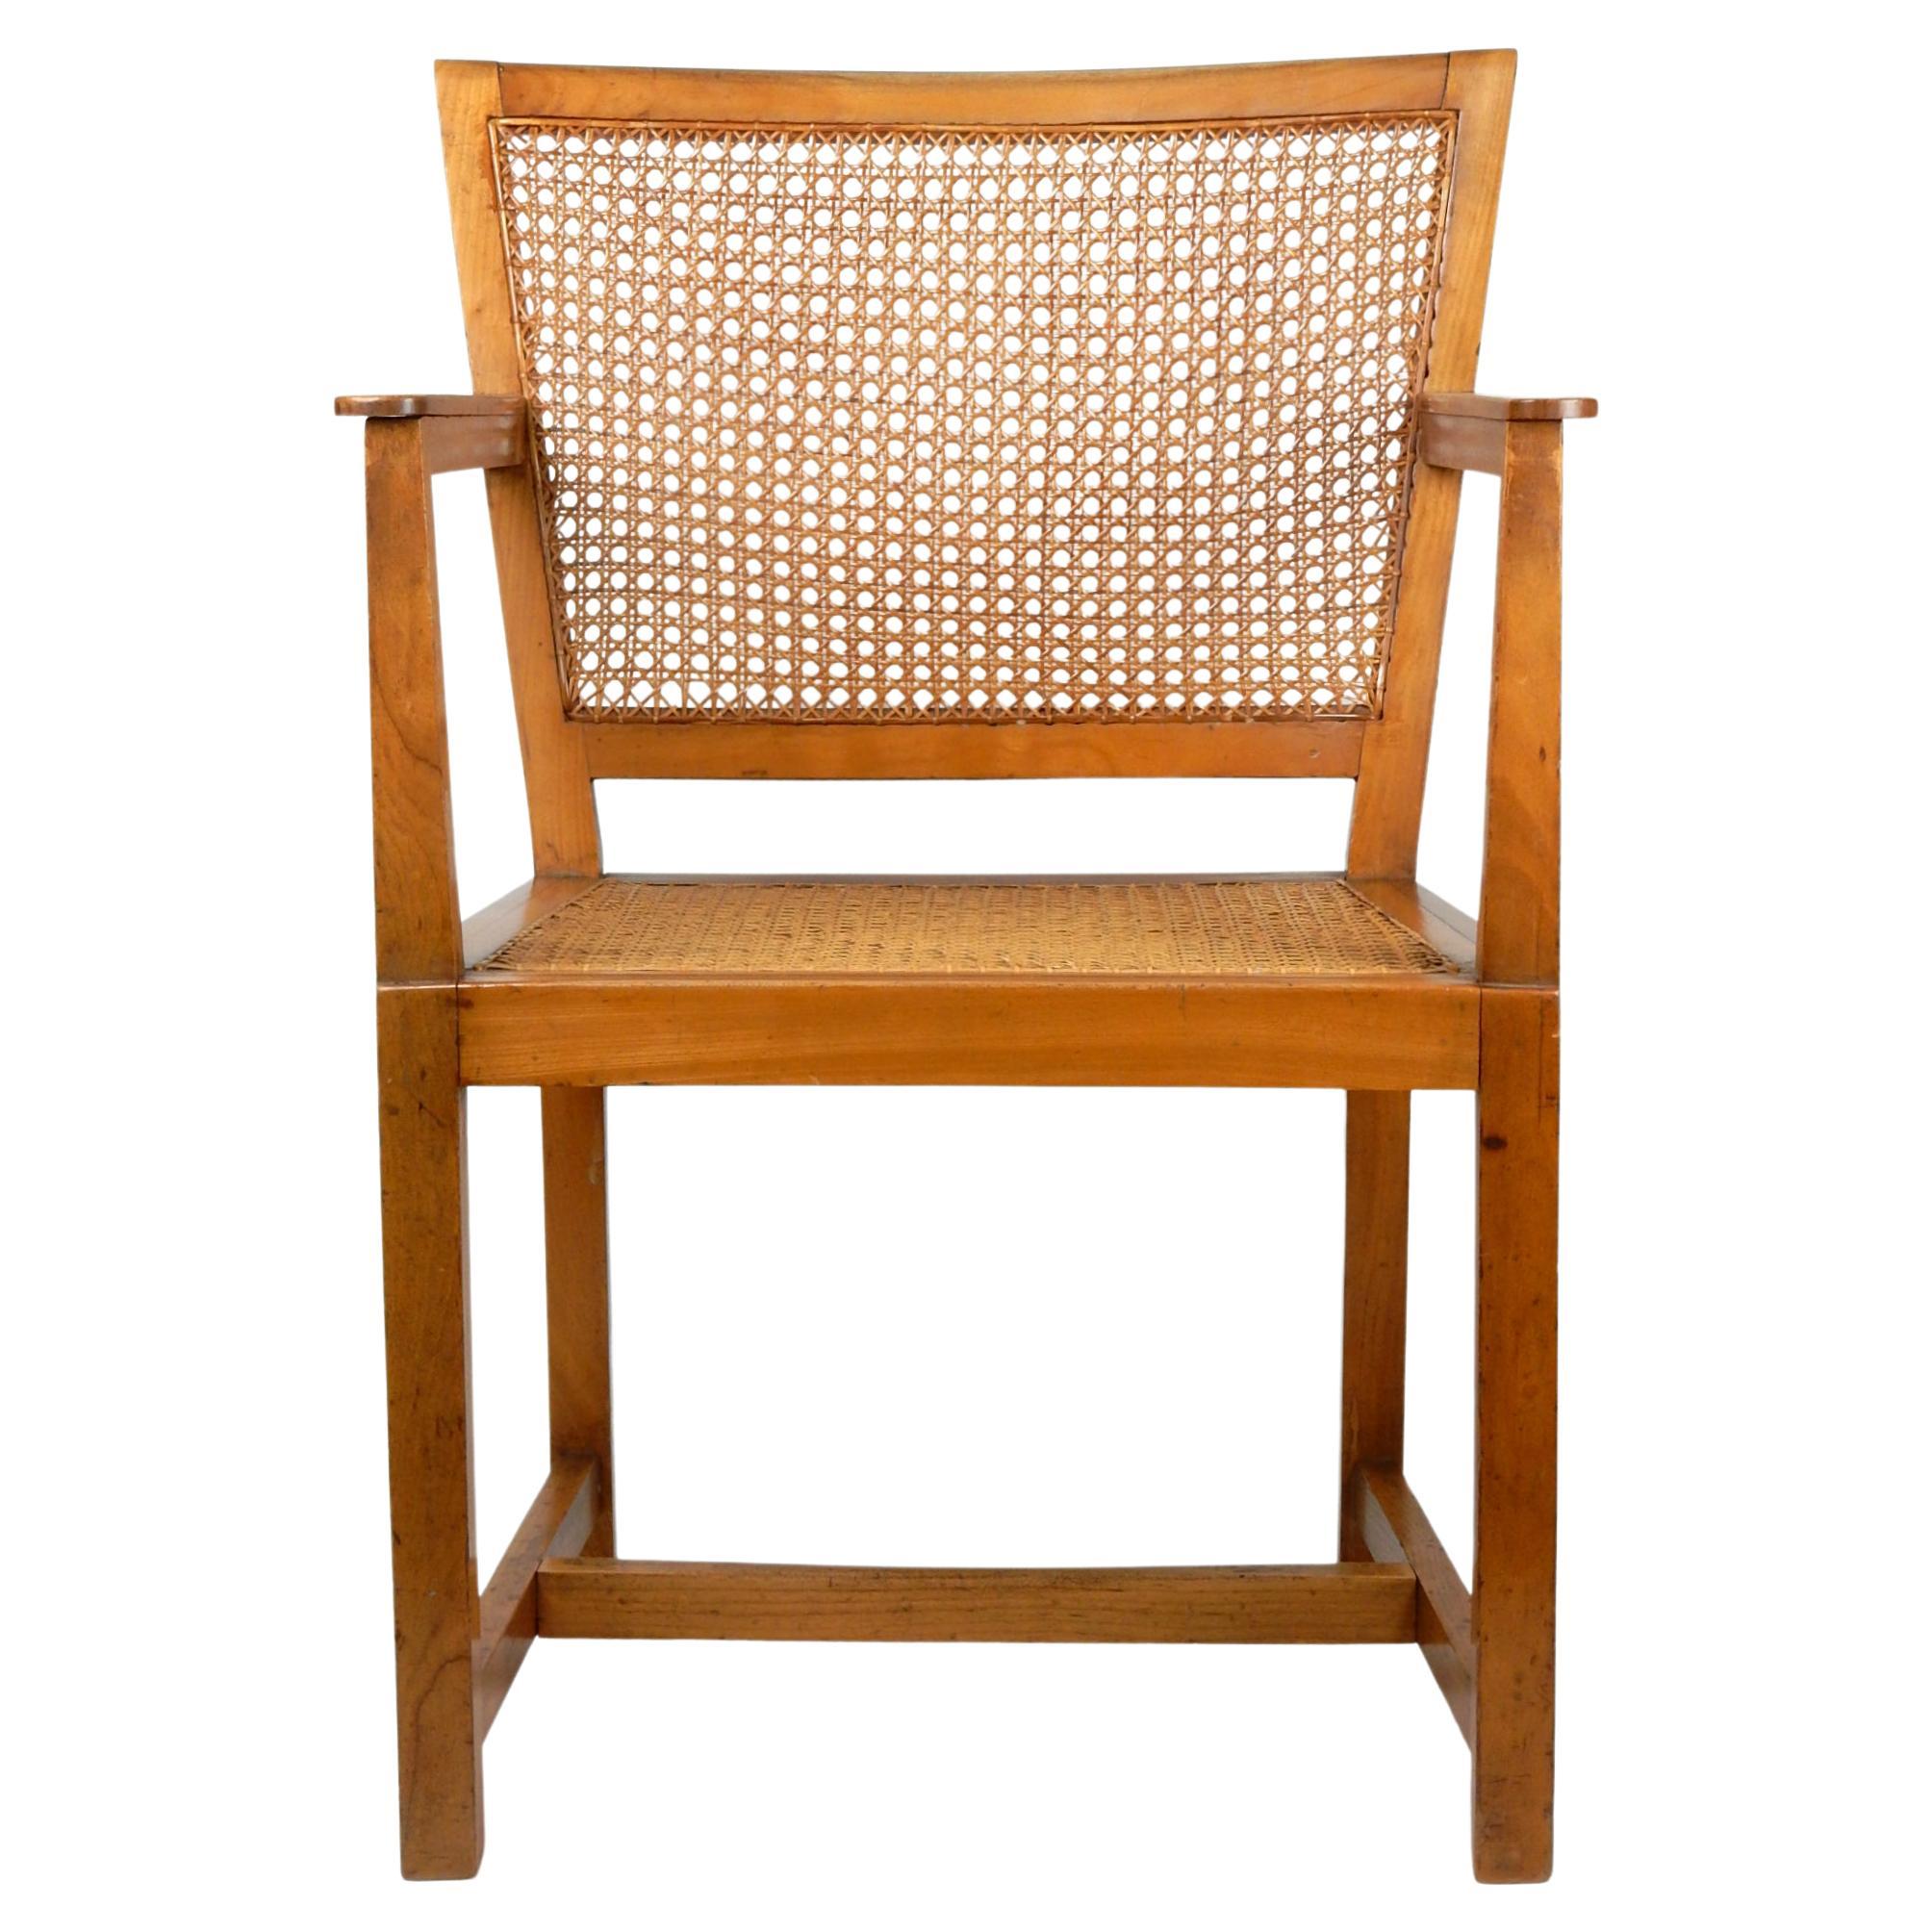 Architect Oskar Strnad 1879-1935 Pine & Cane Arm Chair 1920's Art Deco For Sale 8